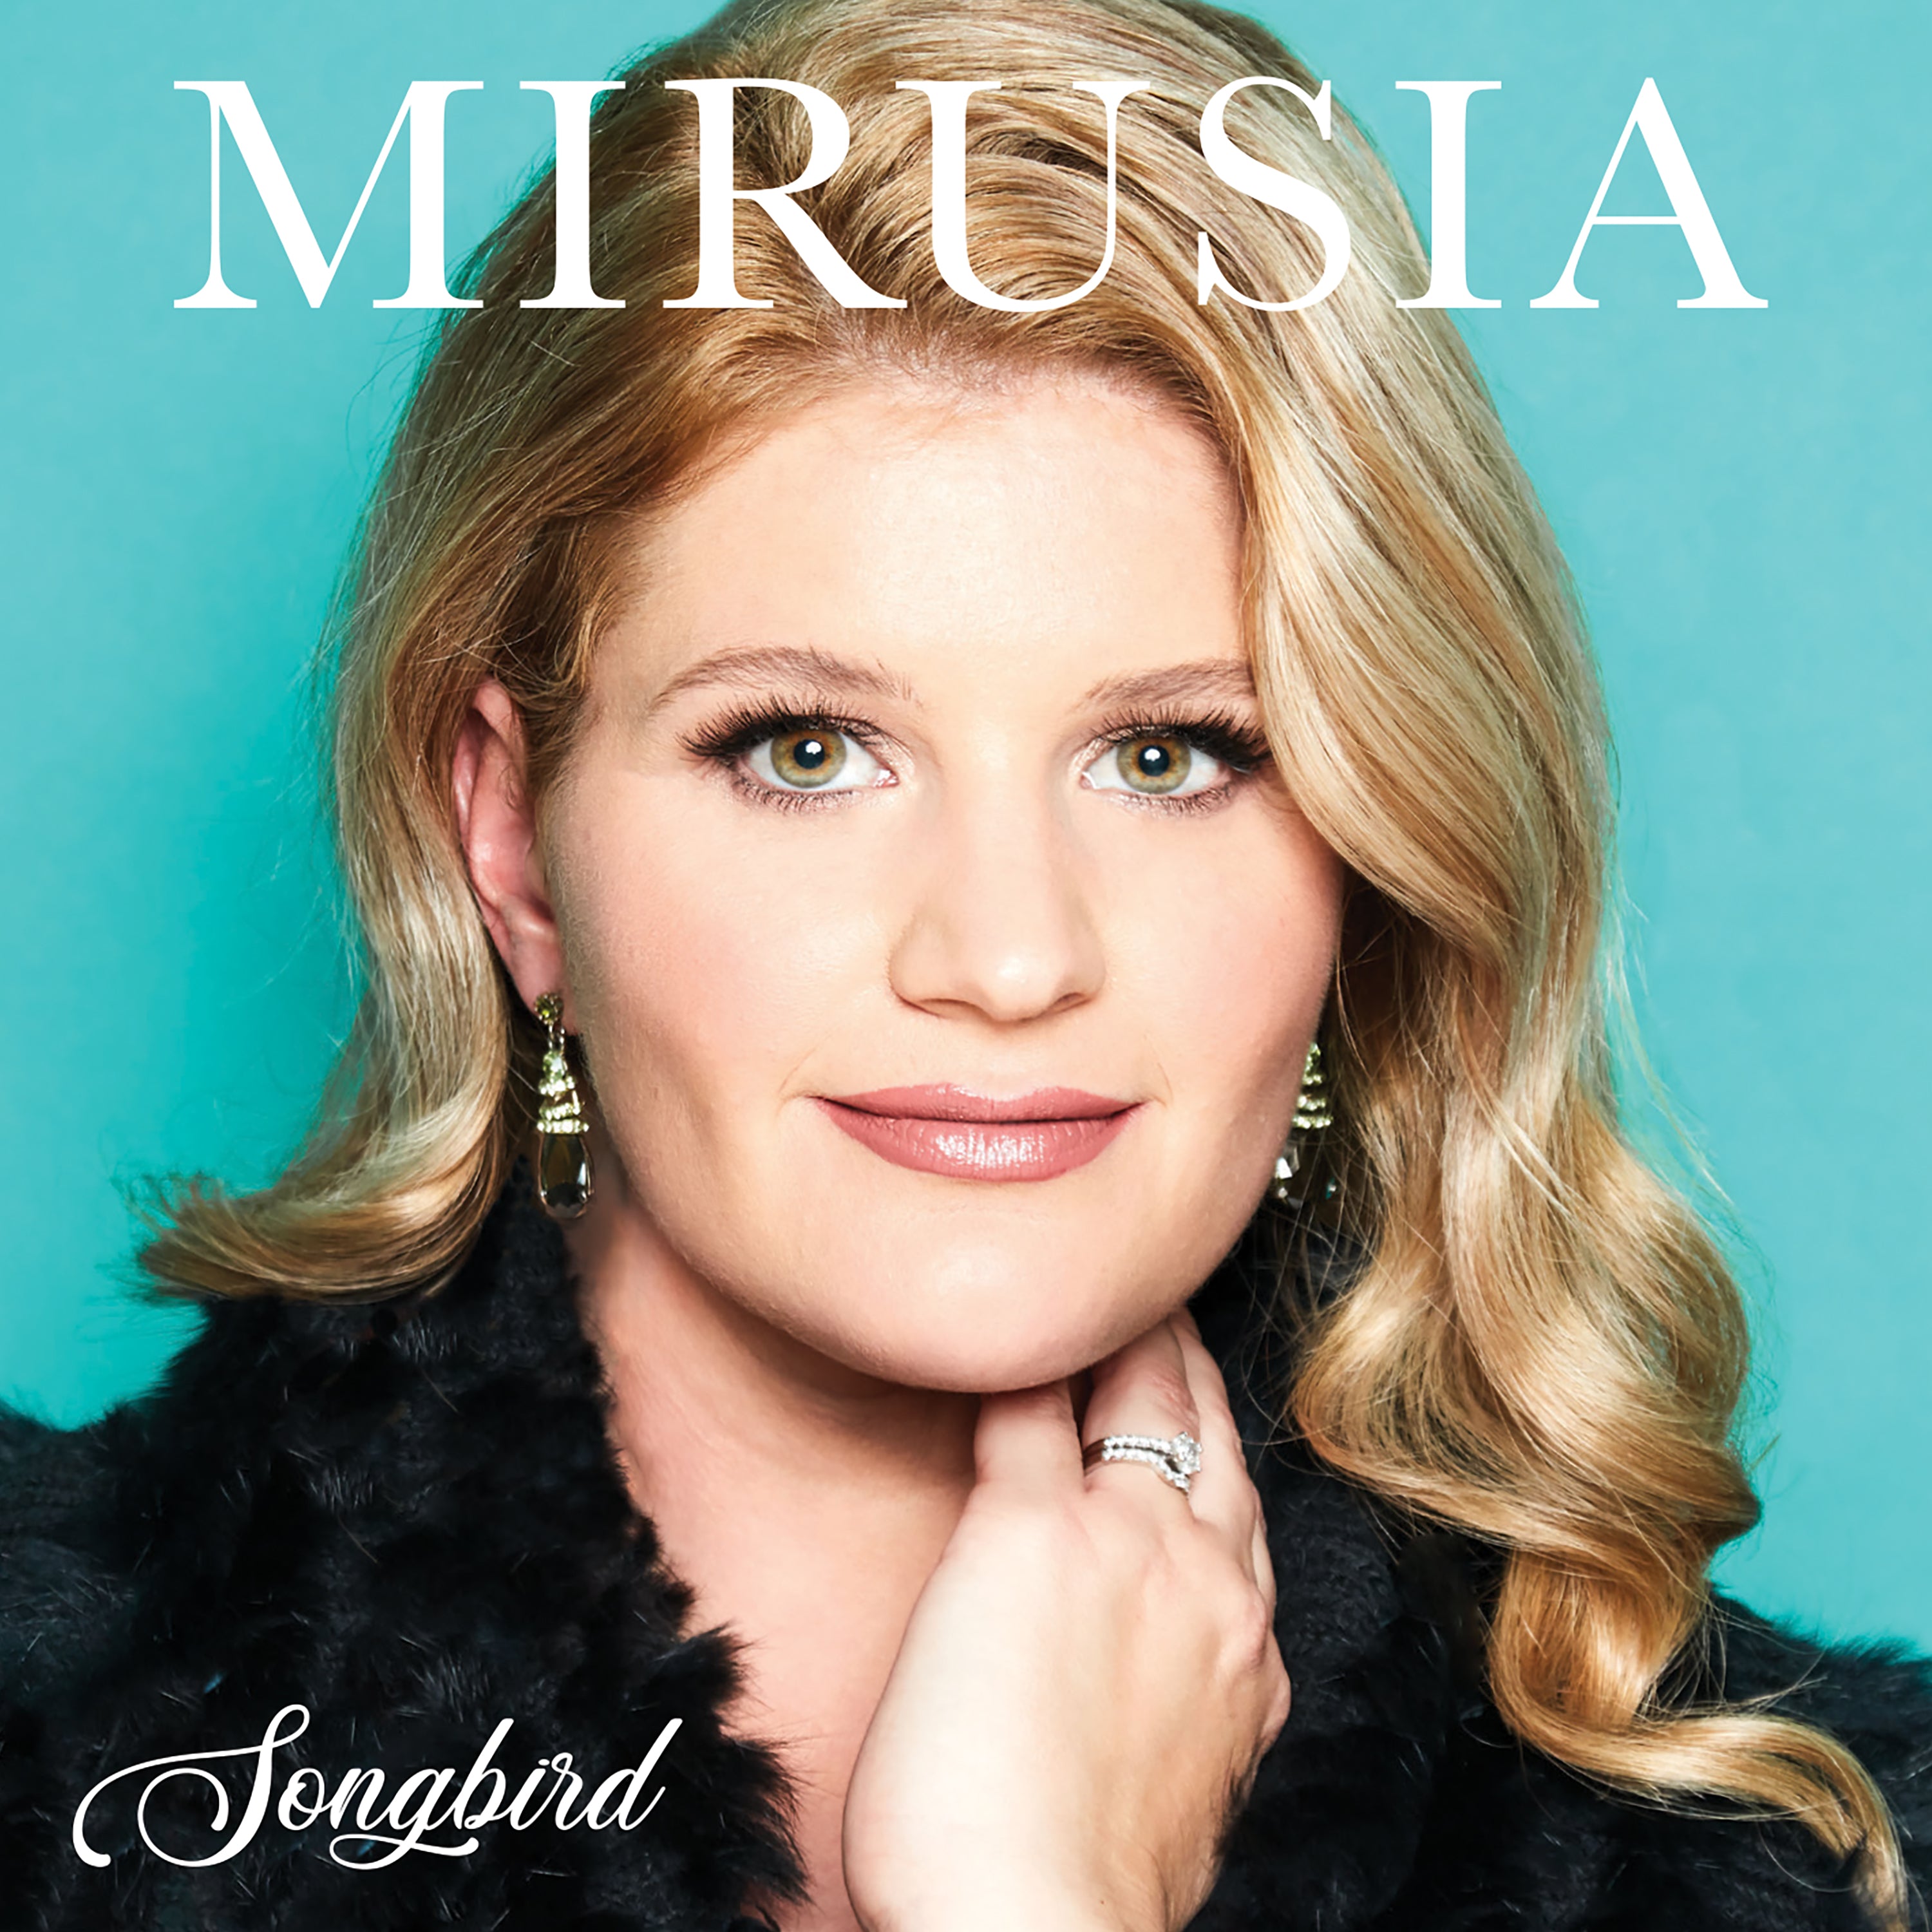 Mirusia heads out on Songbird tour